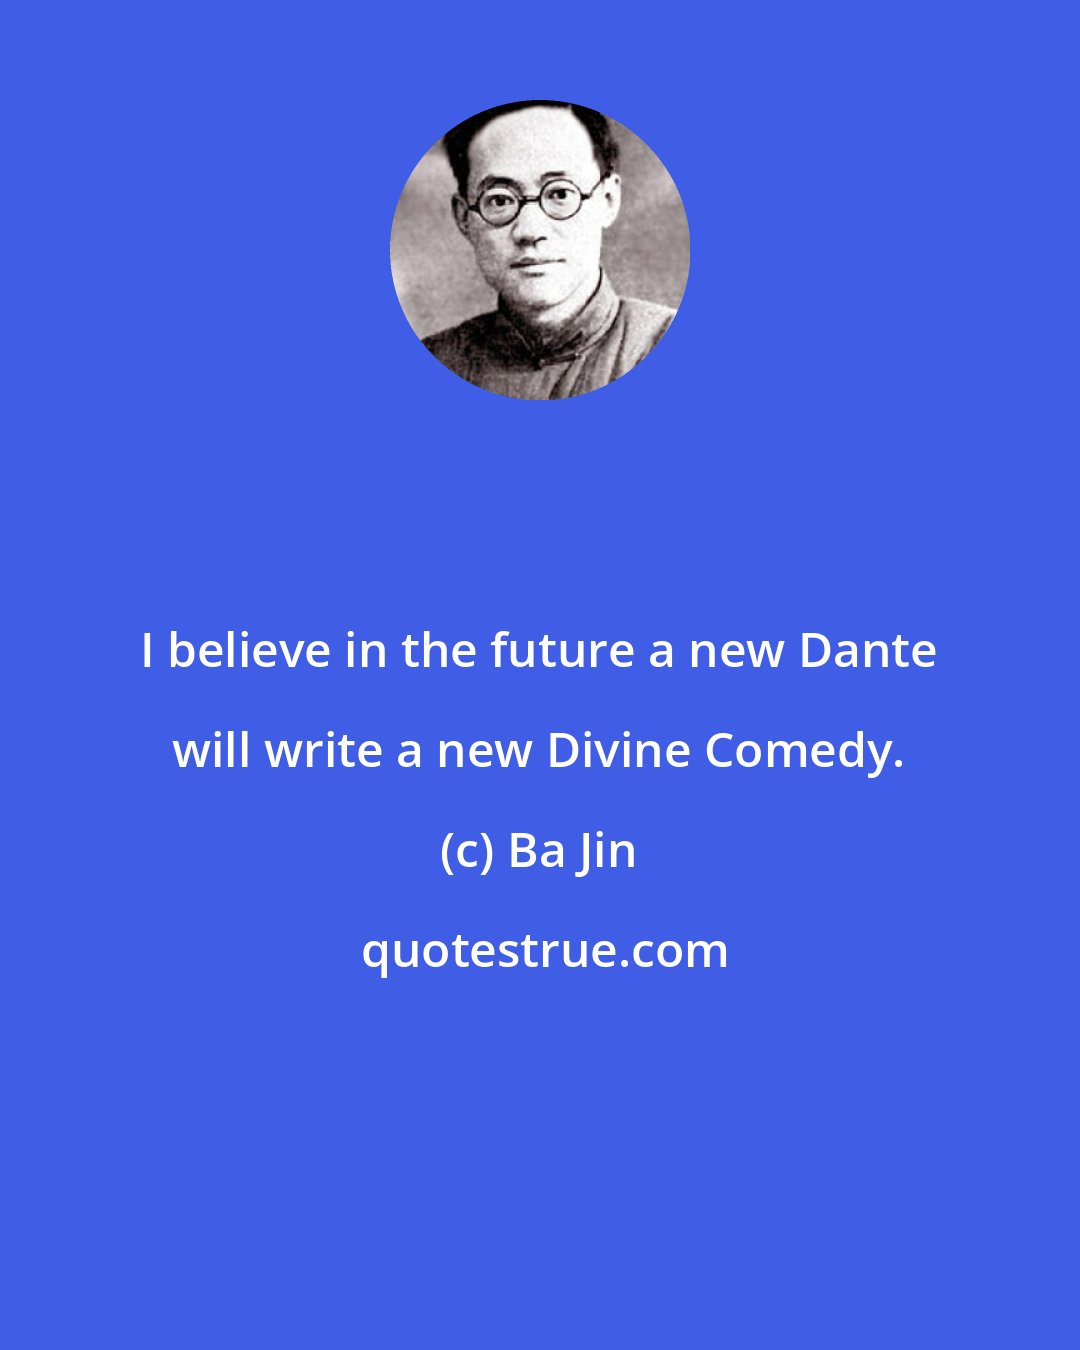 Ba Jin: I believe in the future a new Dante will write a new Divine Comedy.